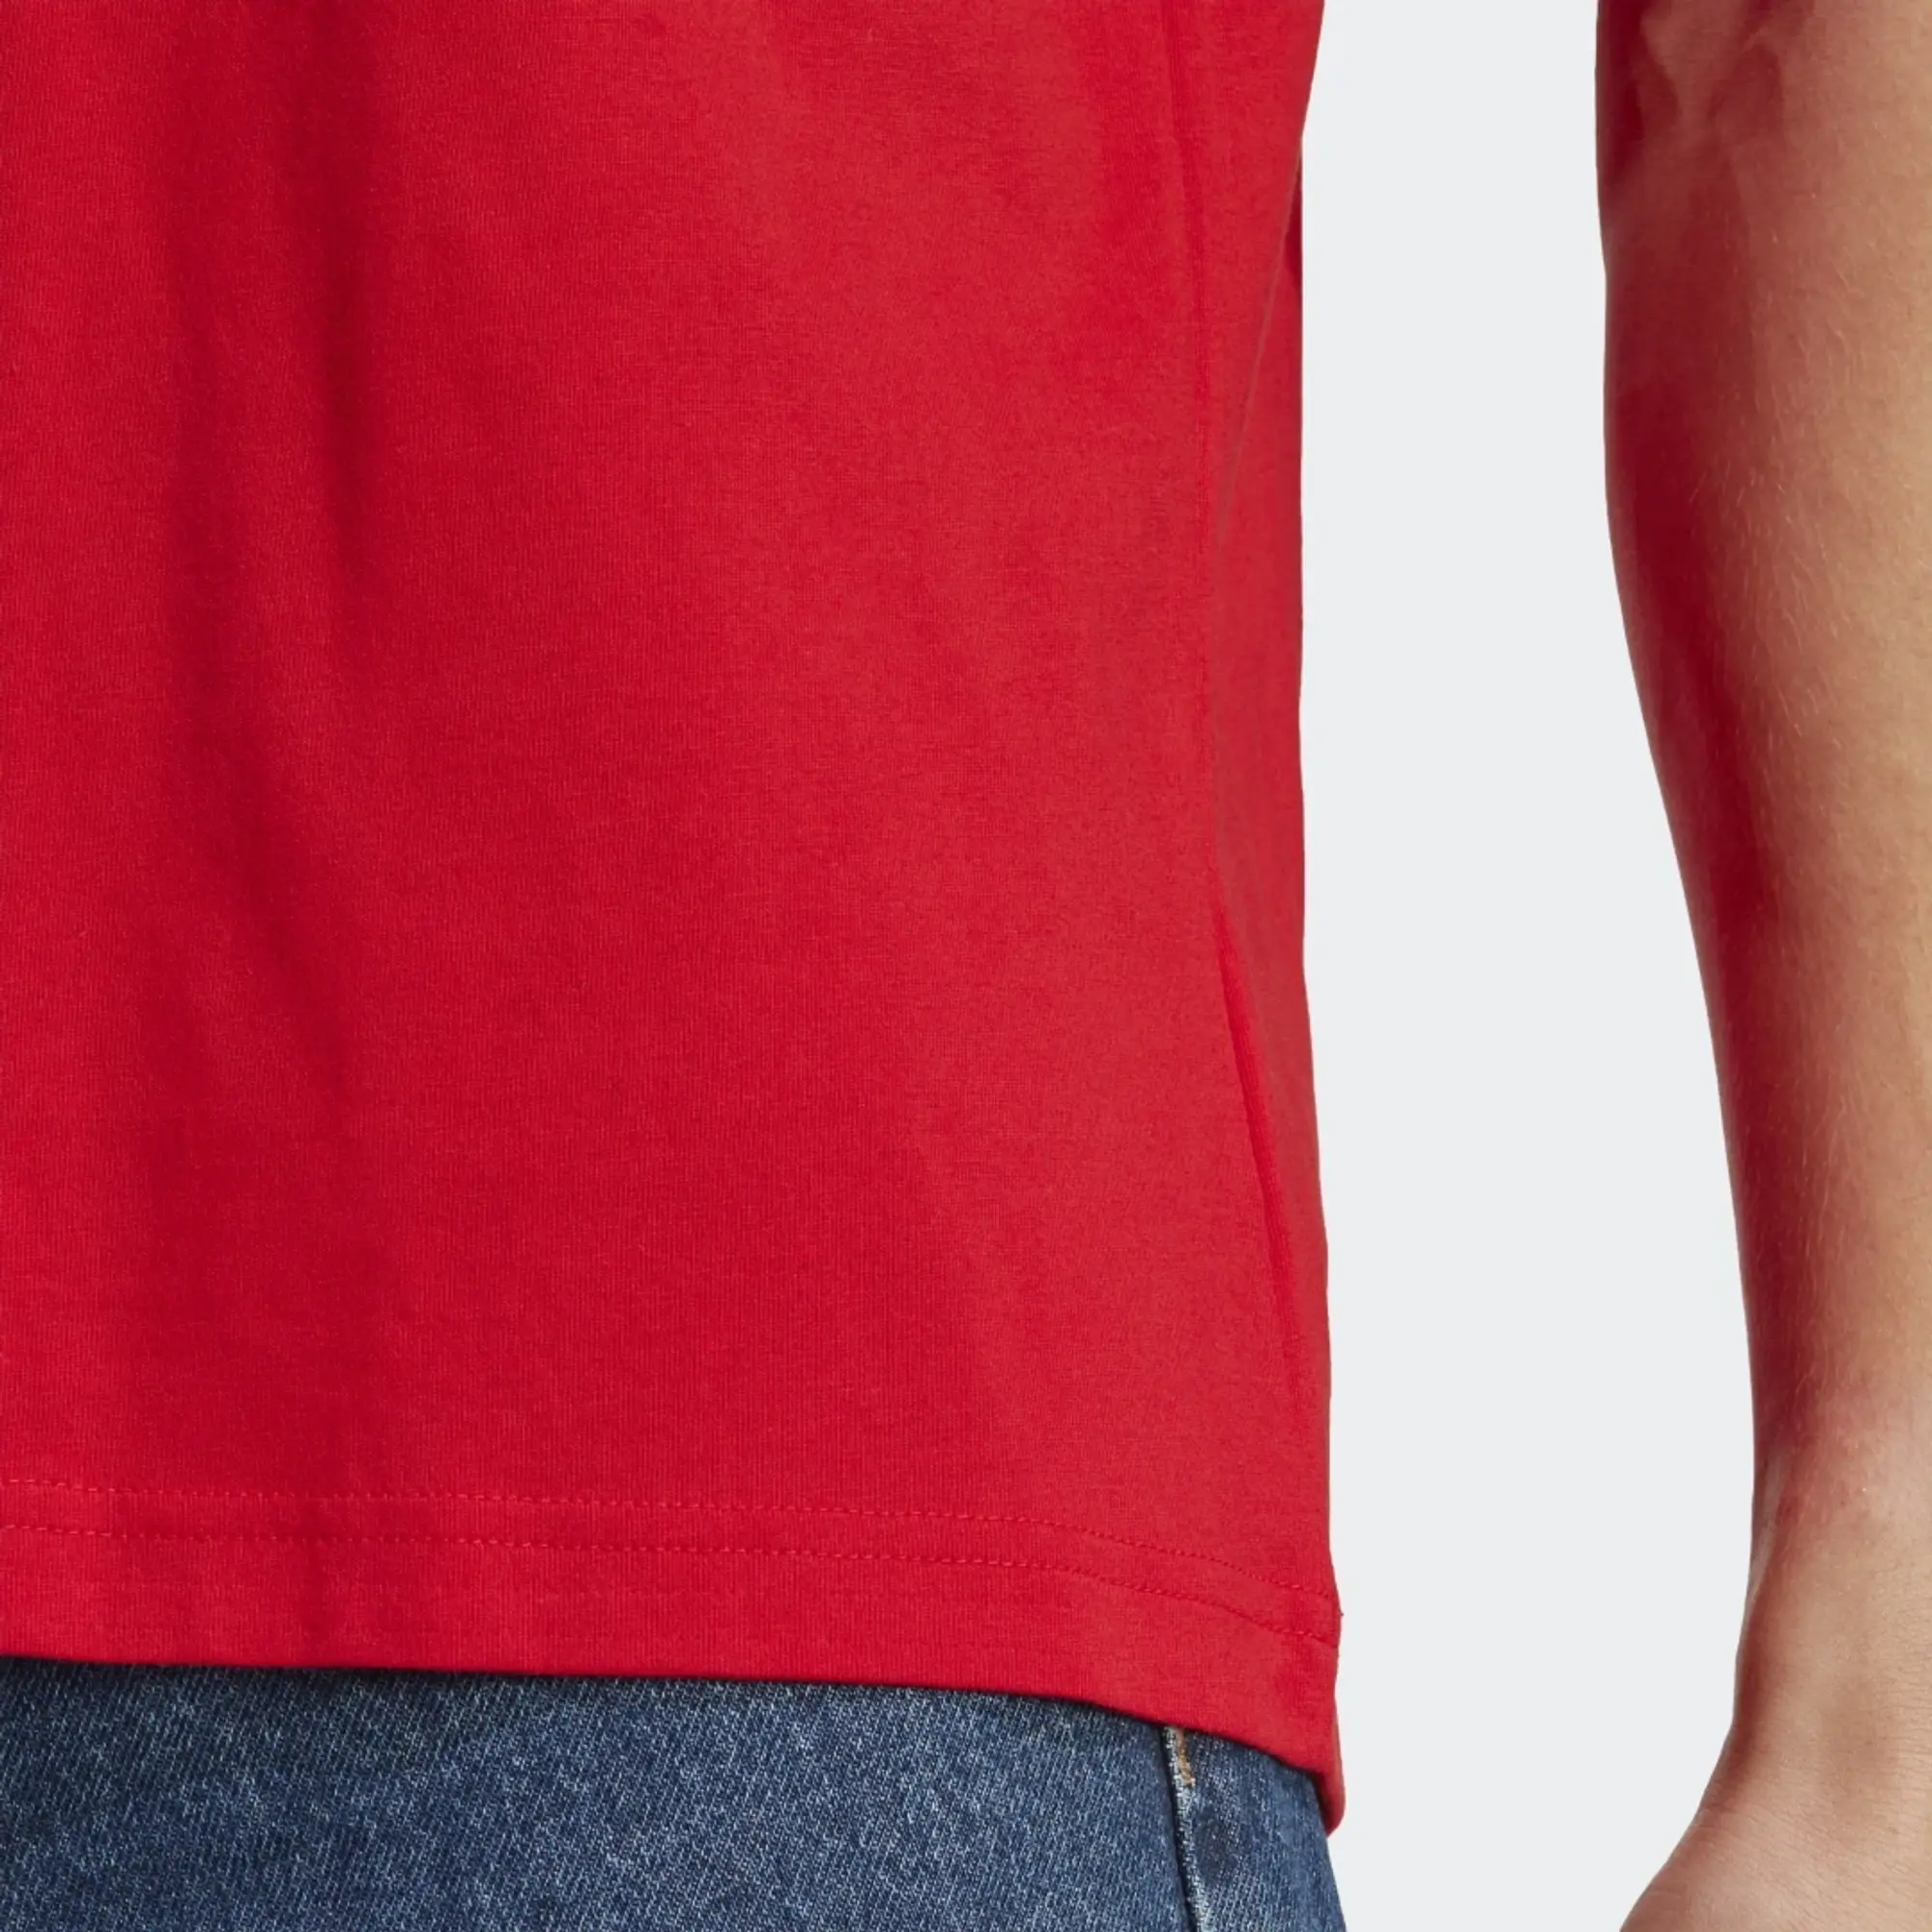 adidas Arsenal Graphic T-Shirt - Red